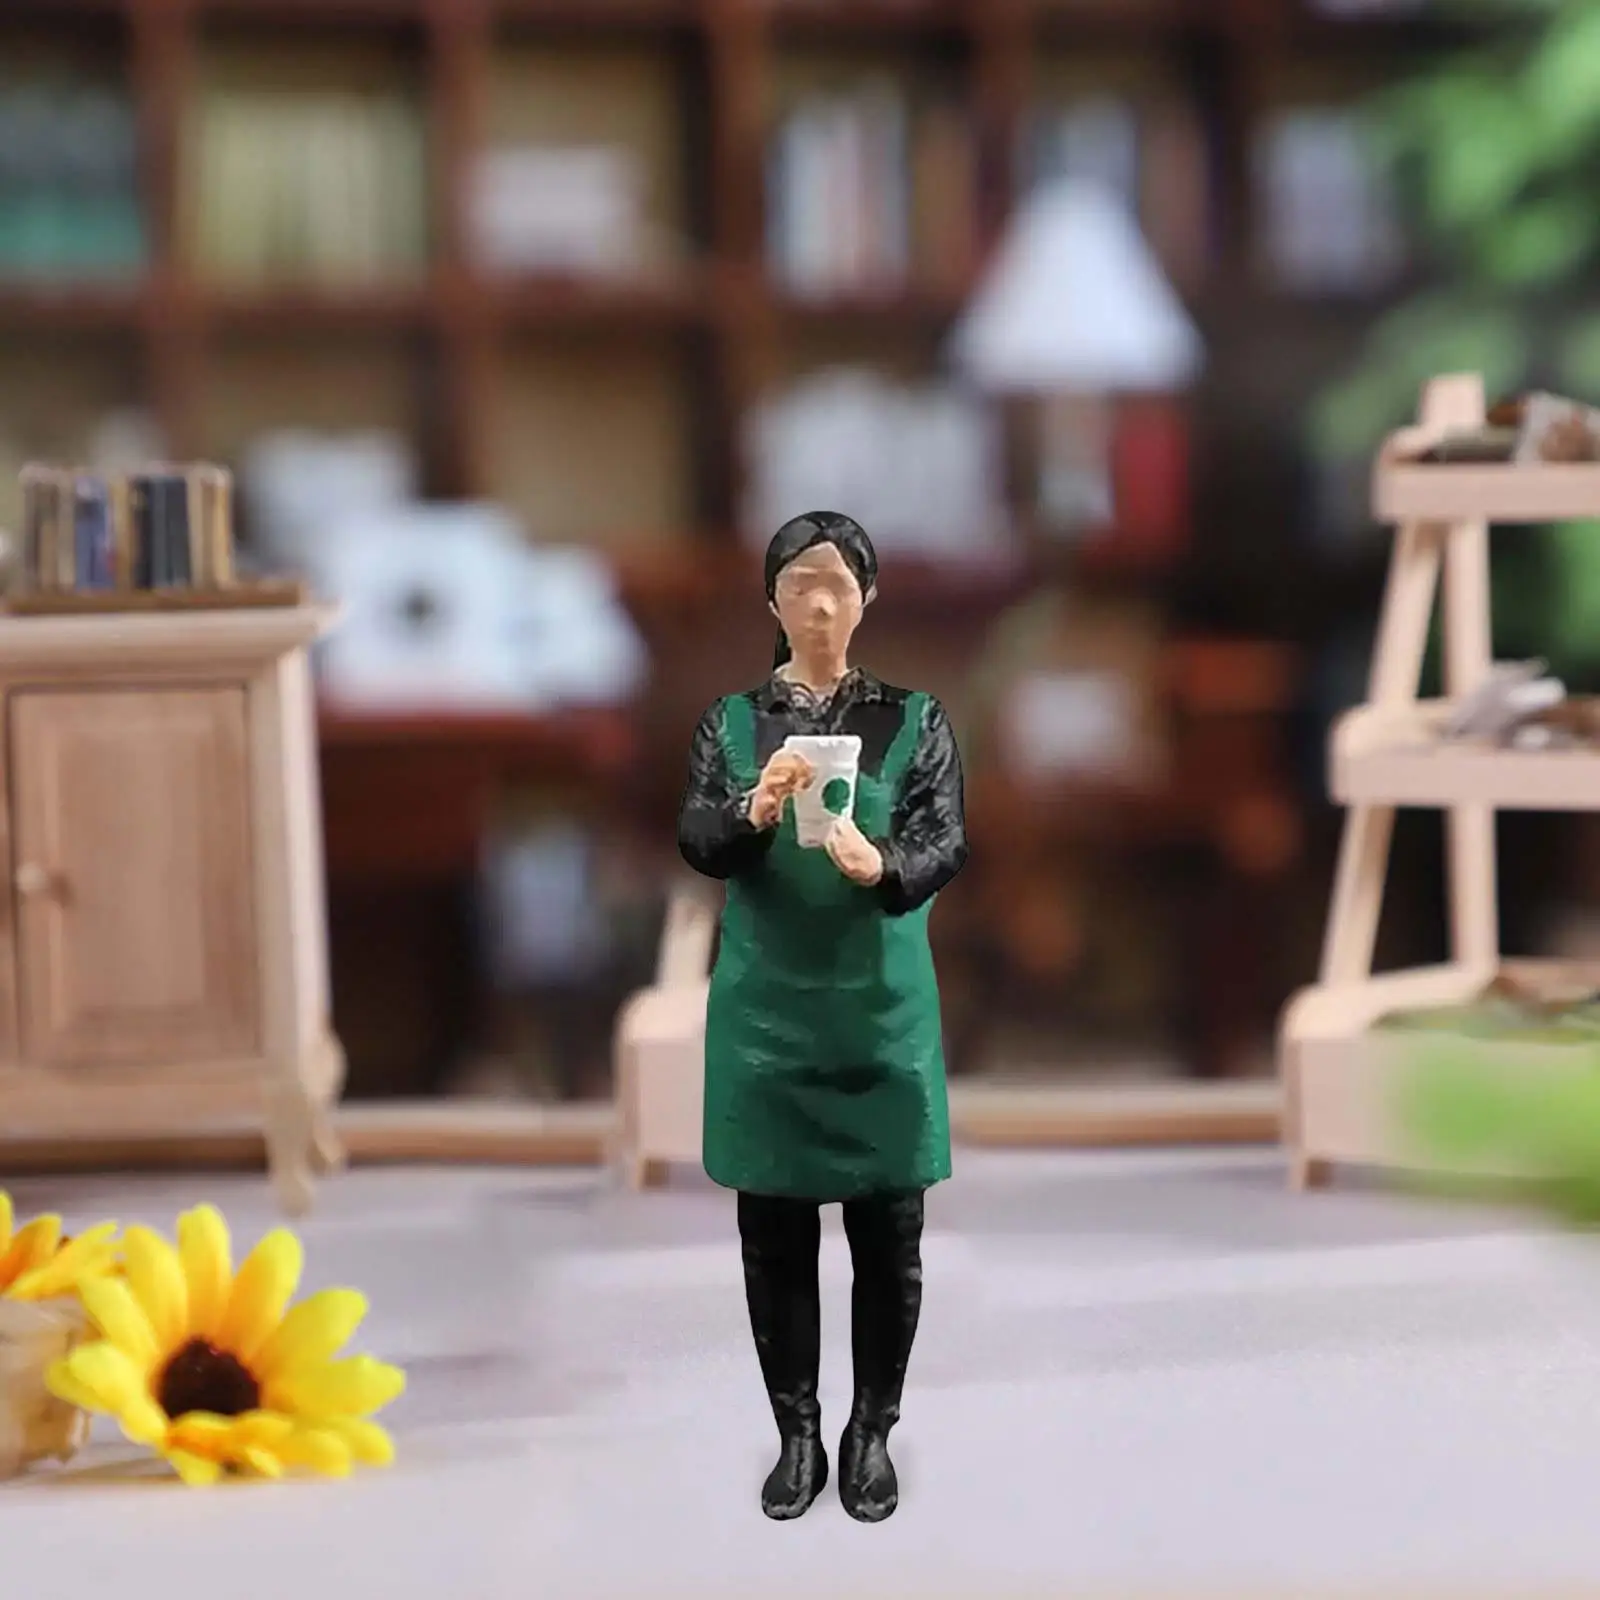 Hand Painted 1:64 Coffee Salesperson Figure Miniature Scenes Dioramas Layout S Gauge Street People Model Movie Props Ornaments